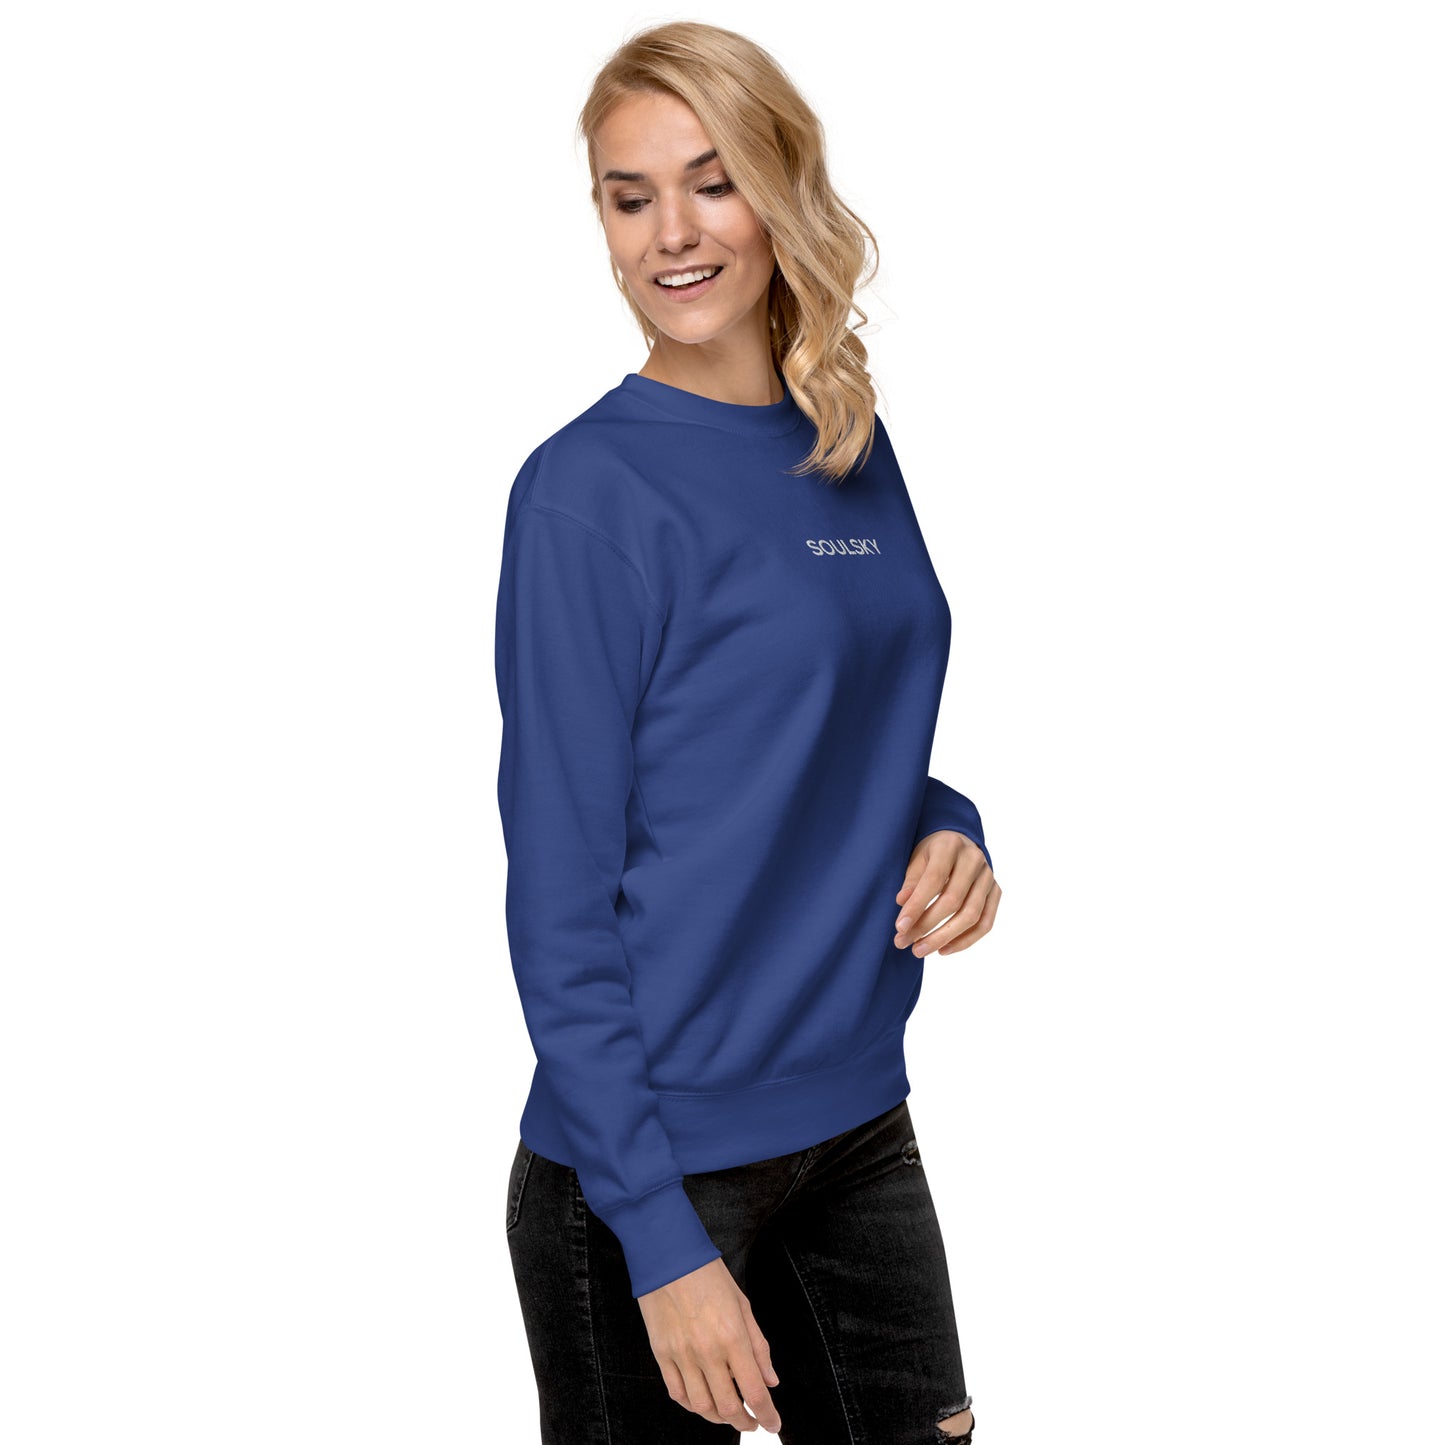 SOULSKY Classic Crew Sweatshirt - Royal Blue